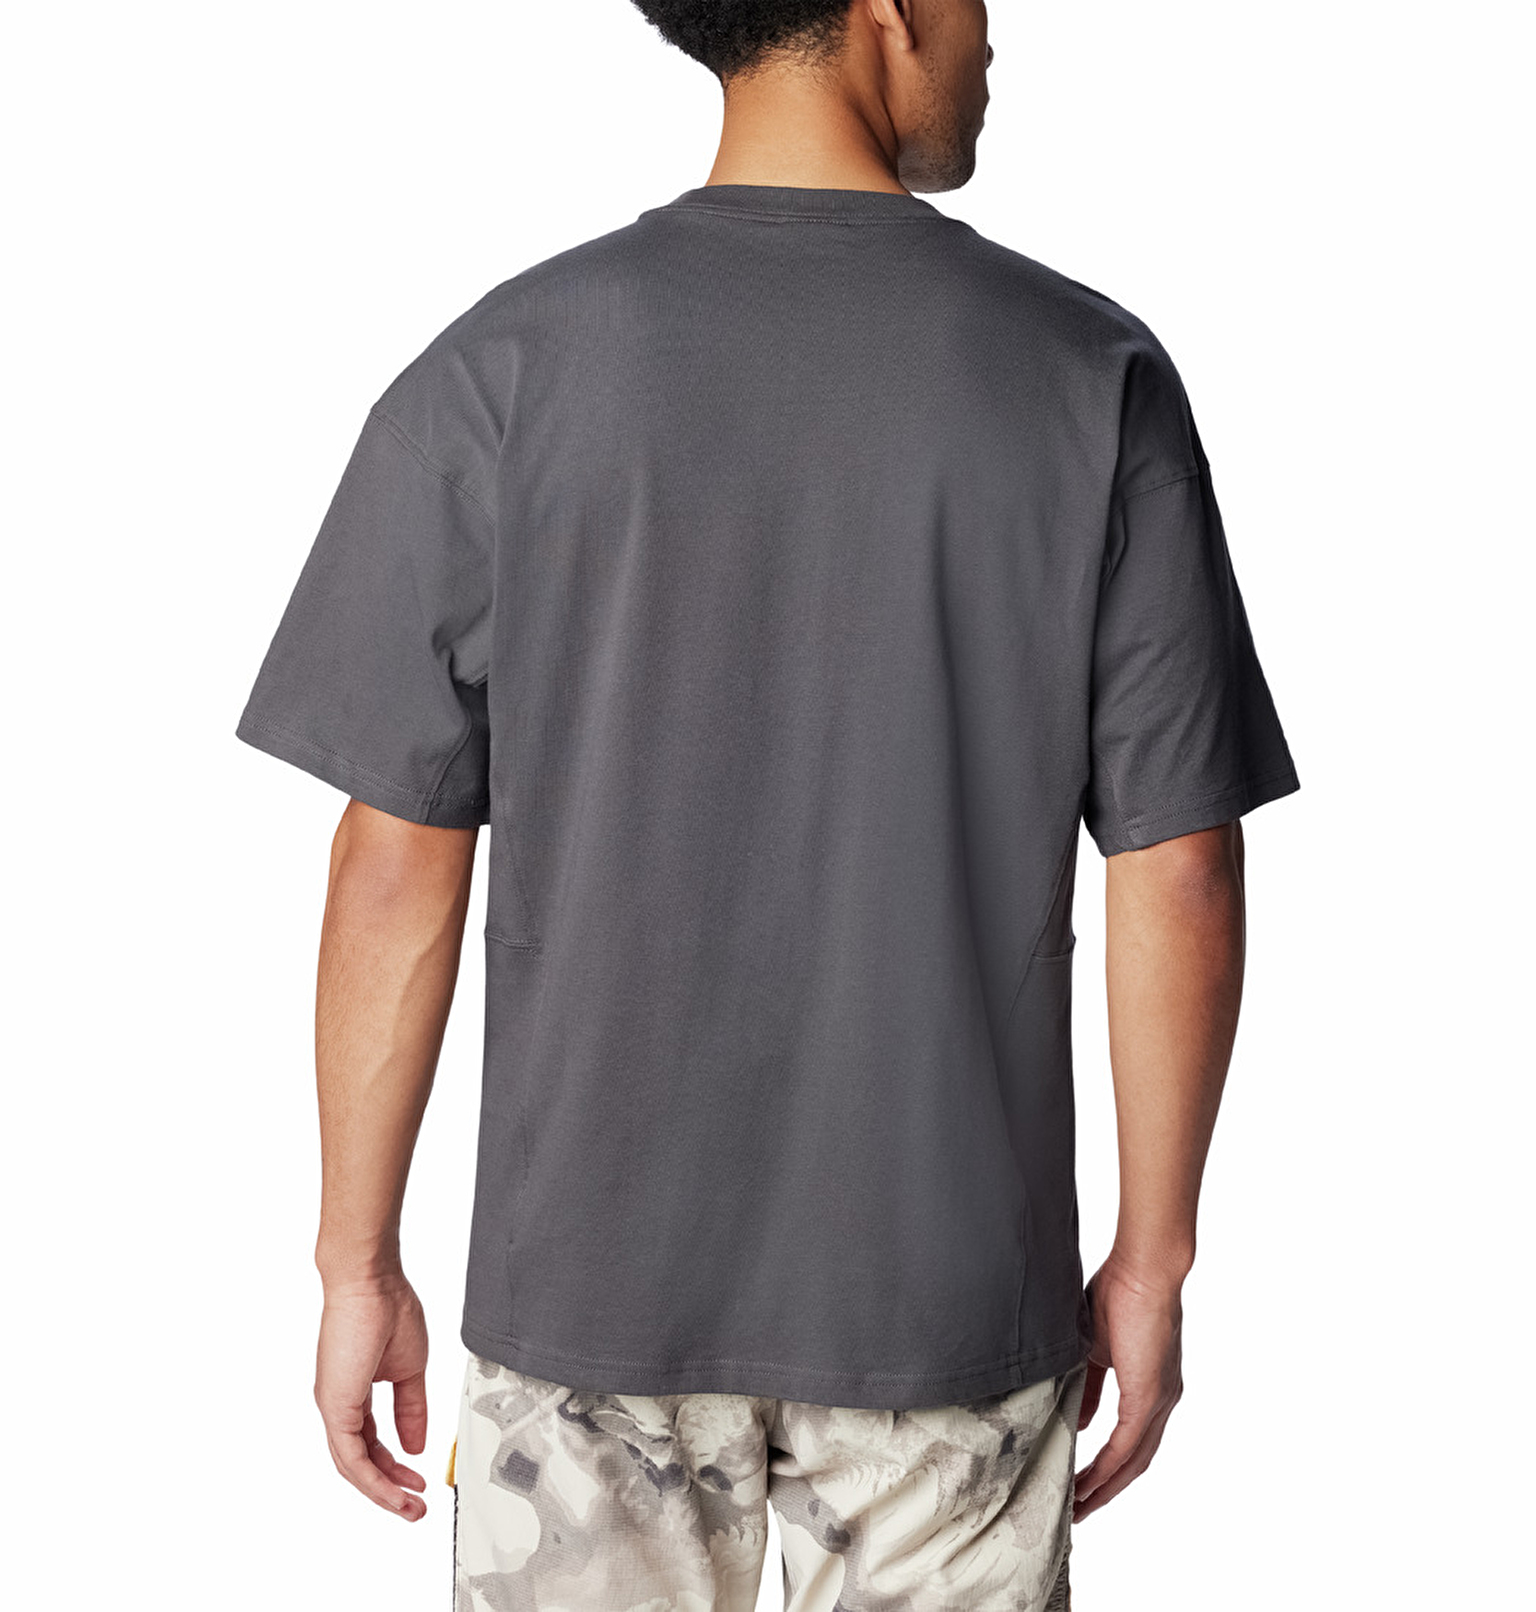 Painted Peak Knit Top Erkek Kısa Kollu T-Shirt